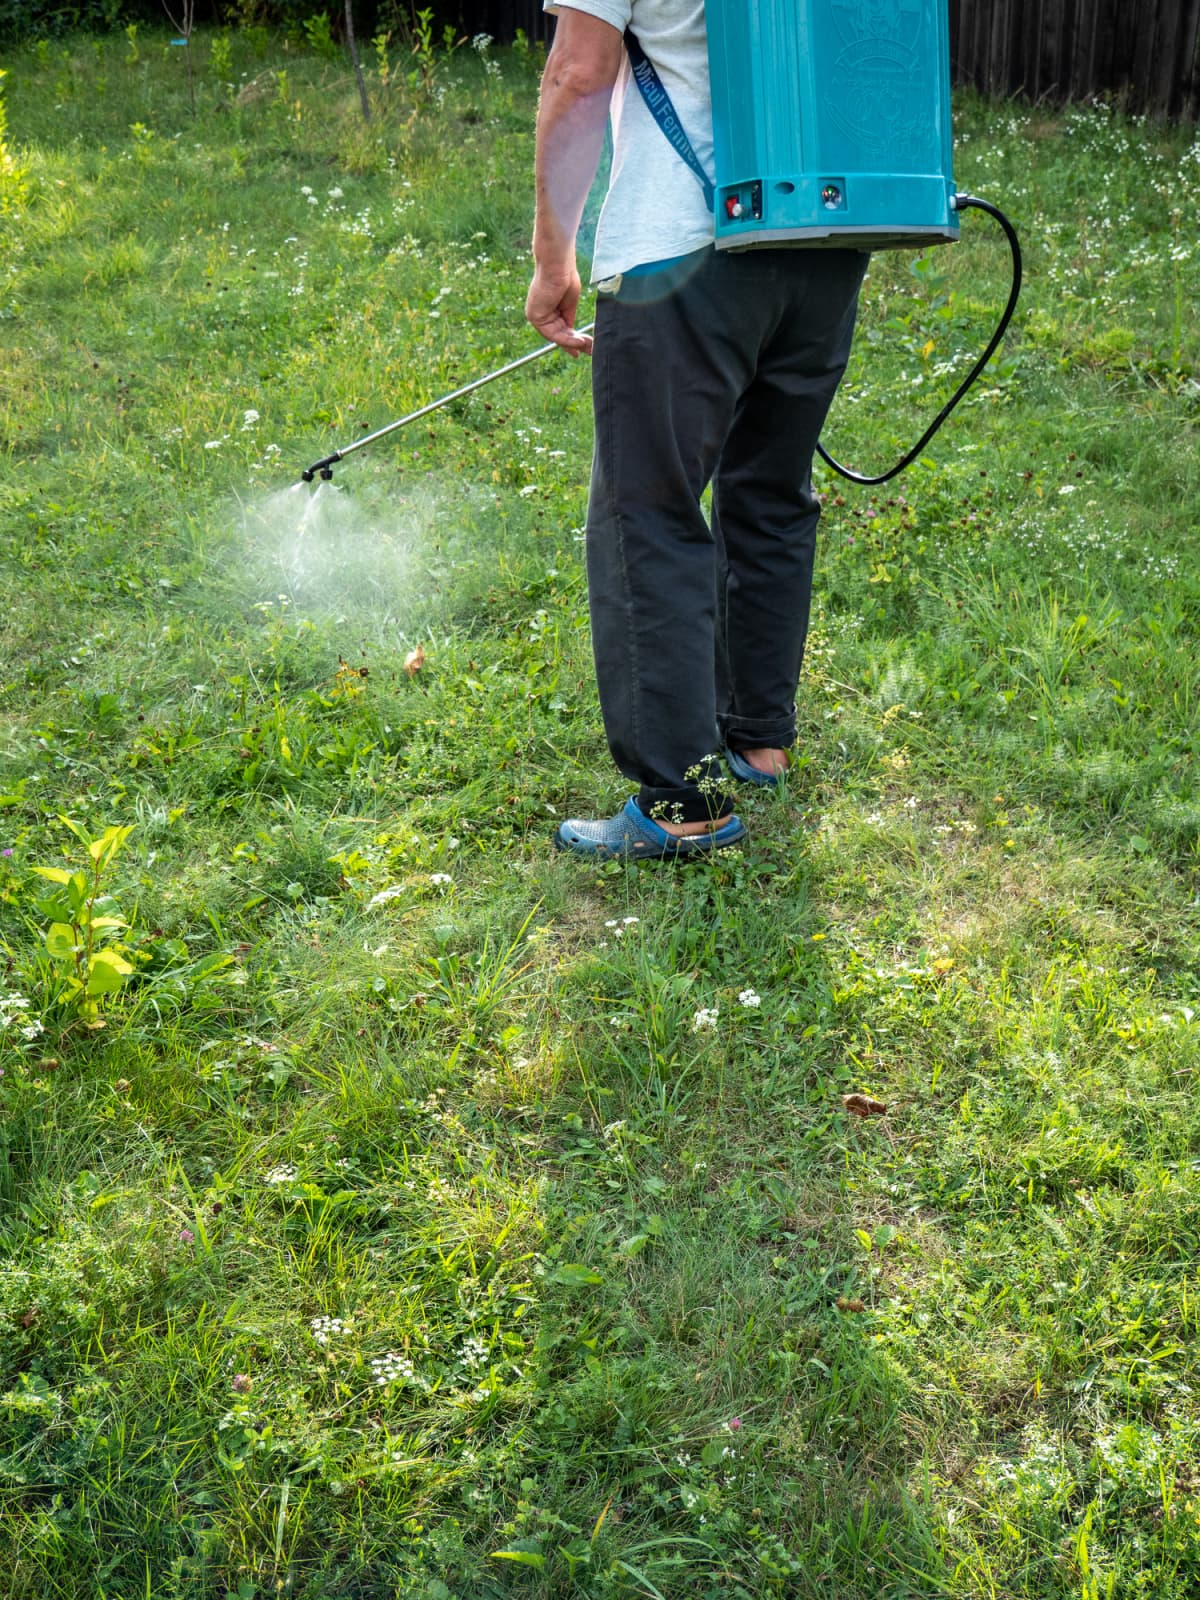 A gardener spraying Borax weed killer in the garden